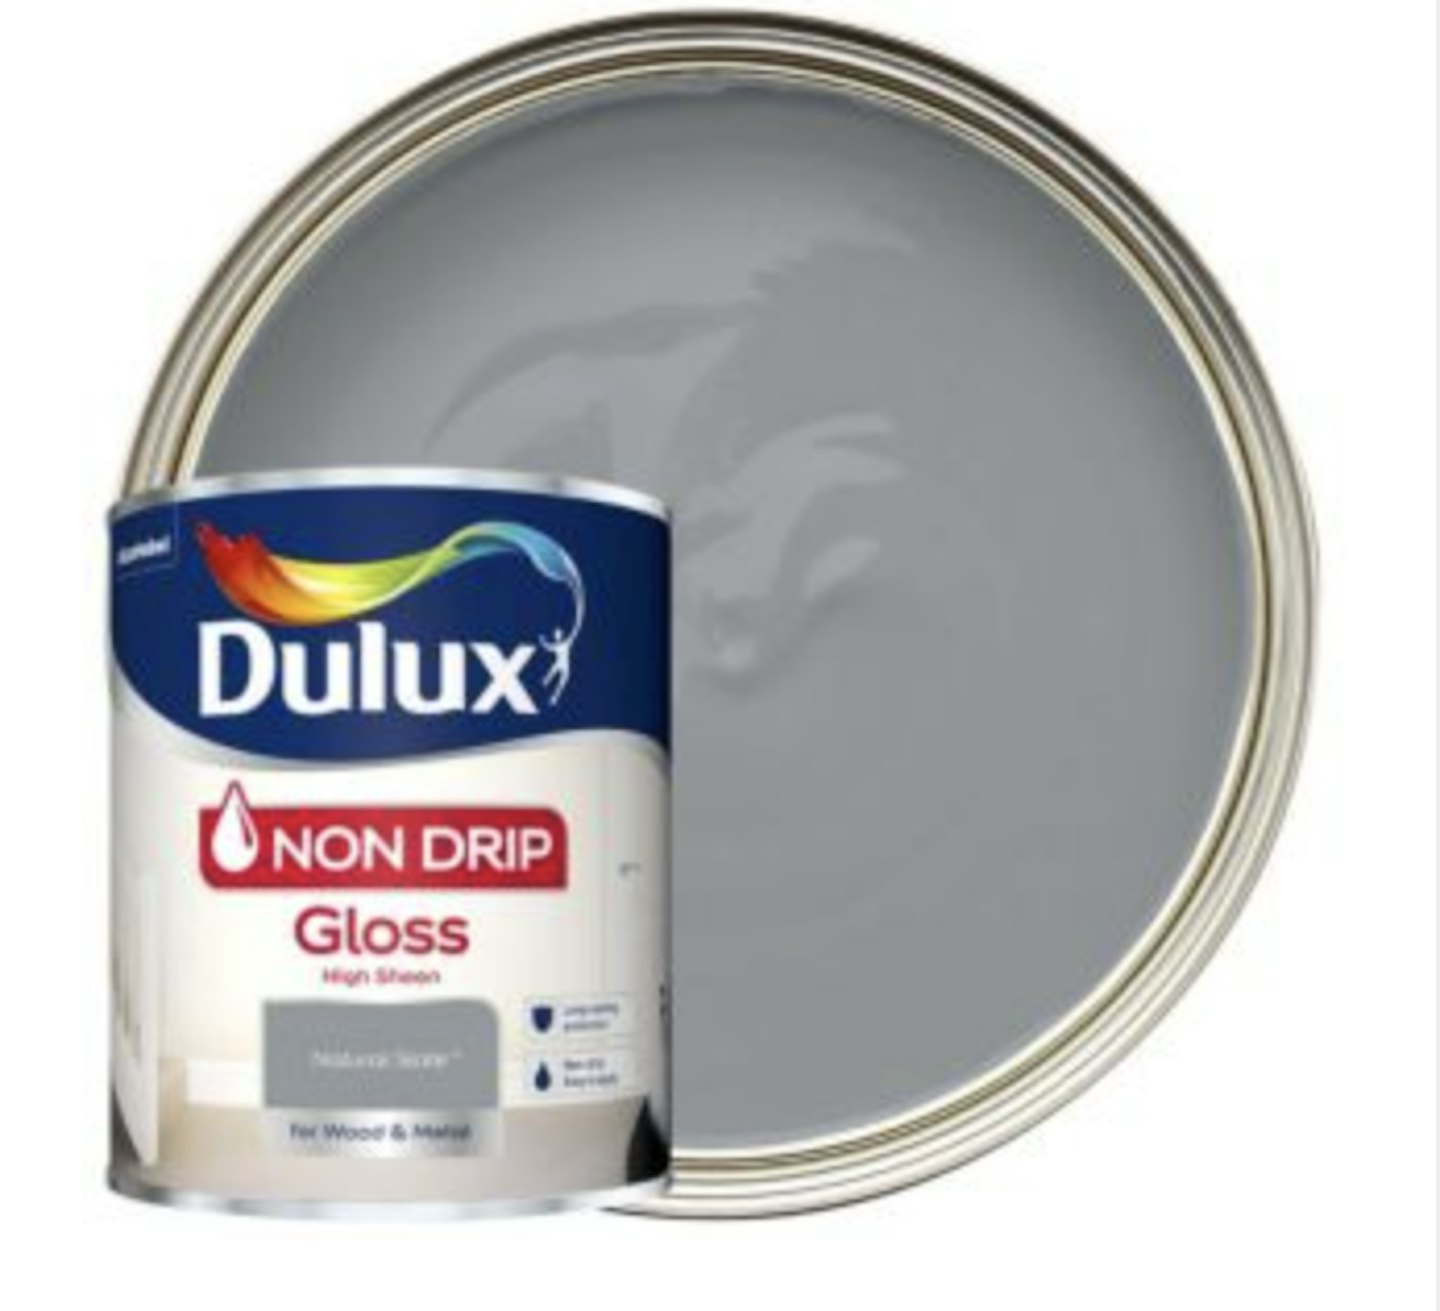 Dulux Non Drip Gloss Natural Slate Paint